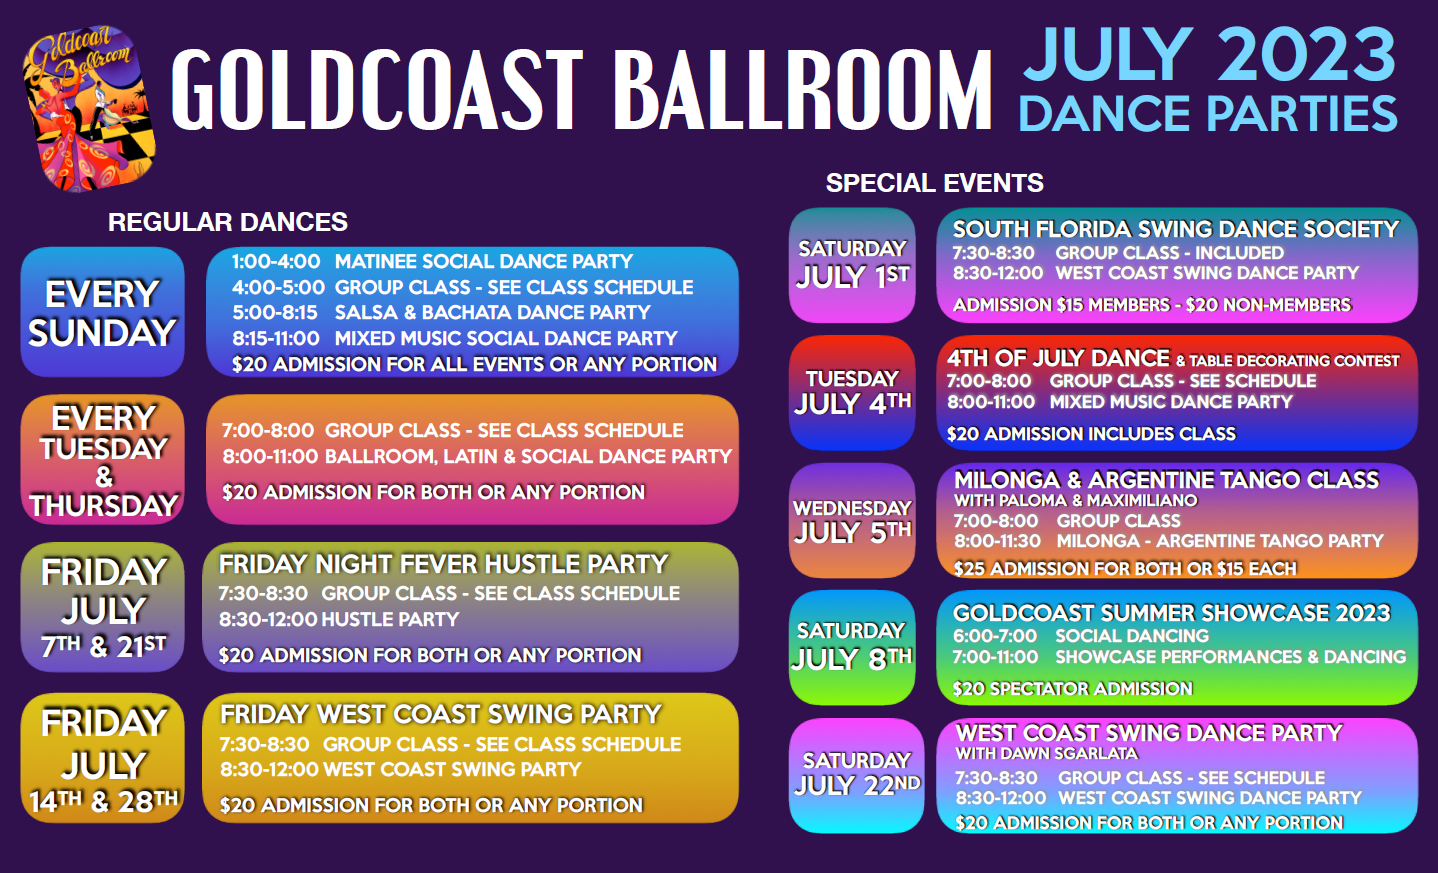 Goldcoast Ballroom July 2023 Dance Parties